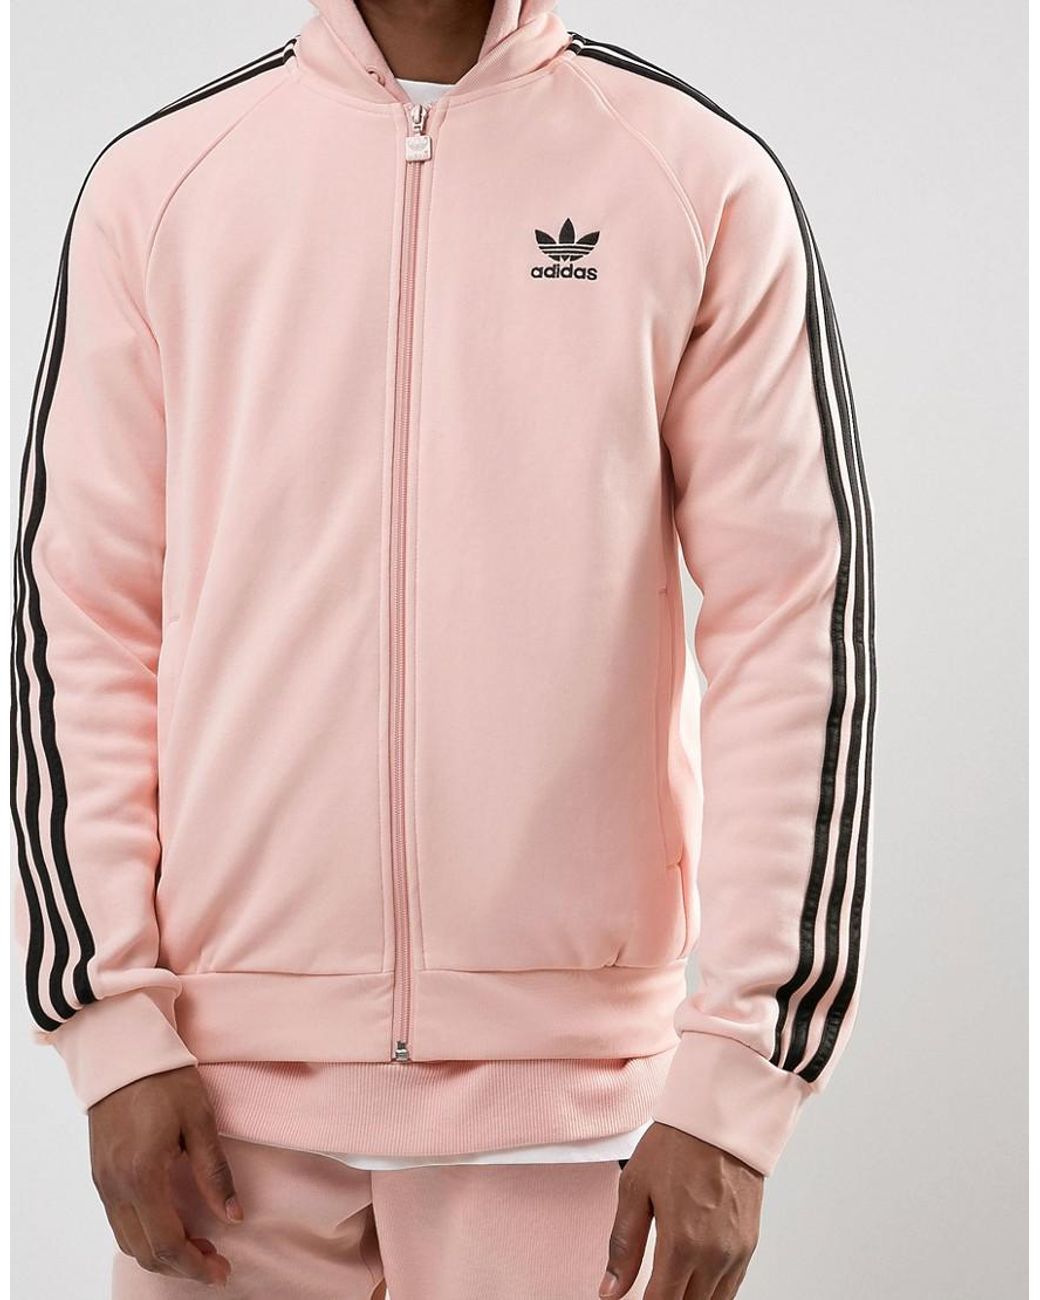 adidas Originals Superstar Track Jacket In Pink Bs4491 for Men | Lyst